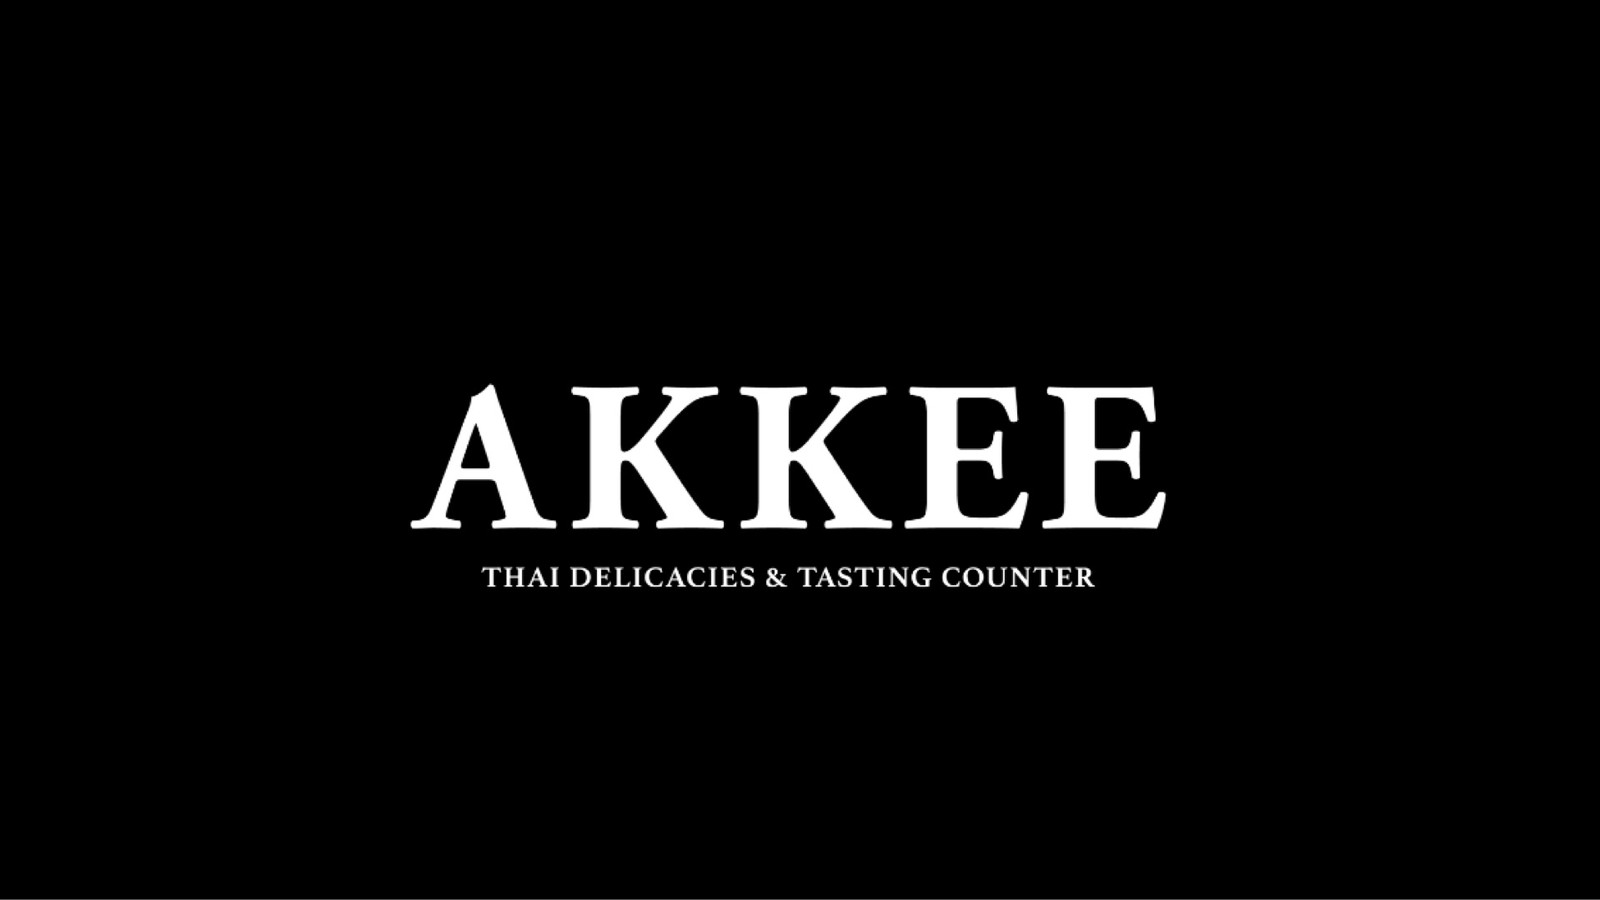 akkee-thai-delicacies---tasting-counter